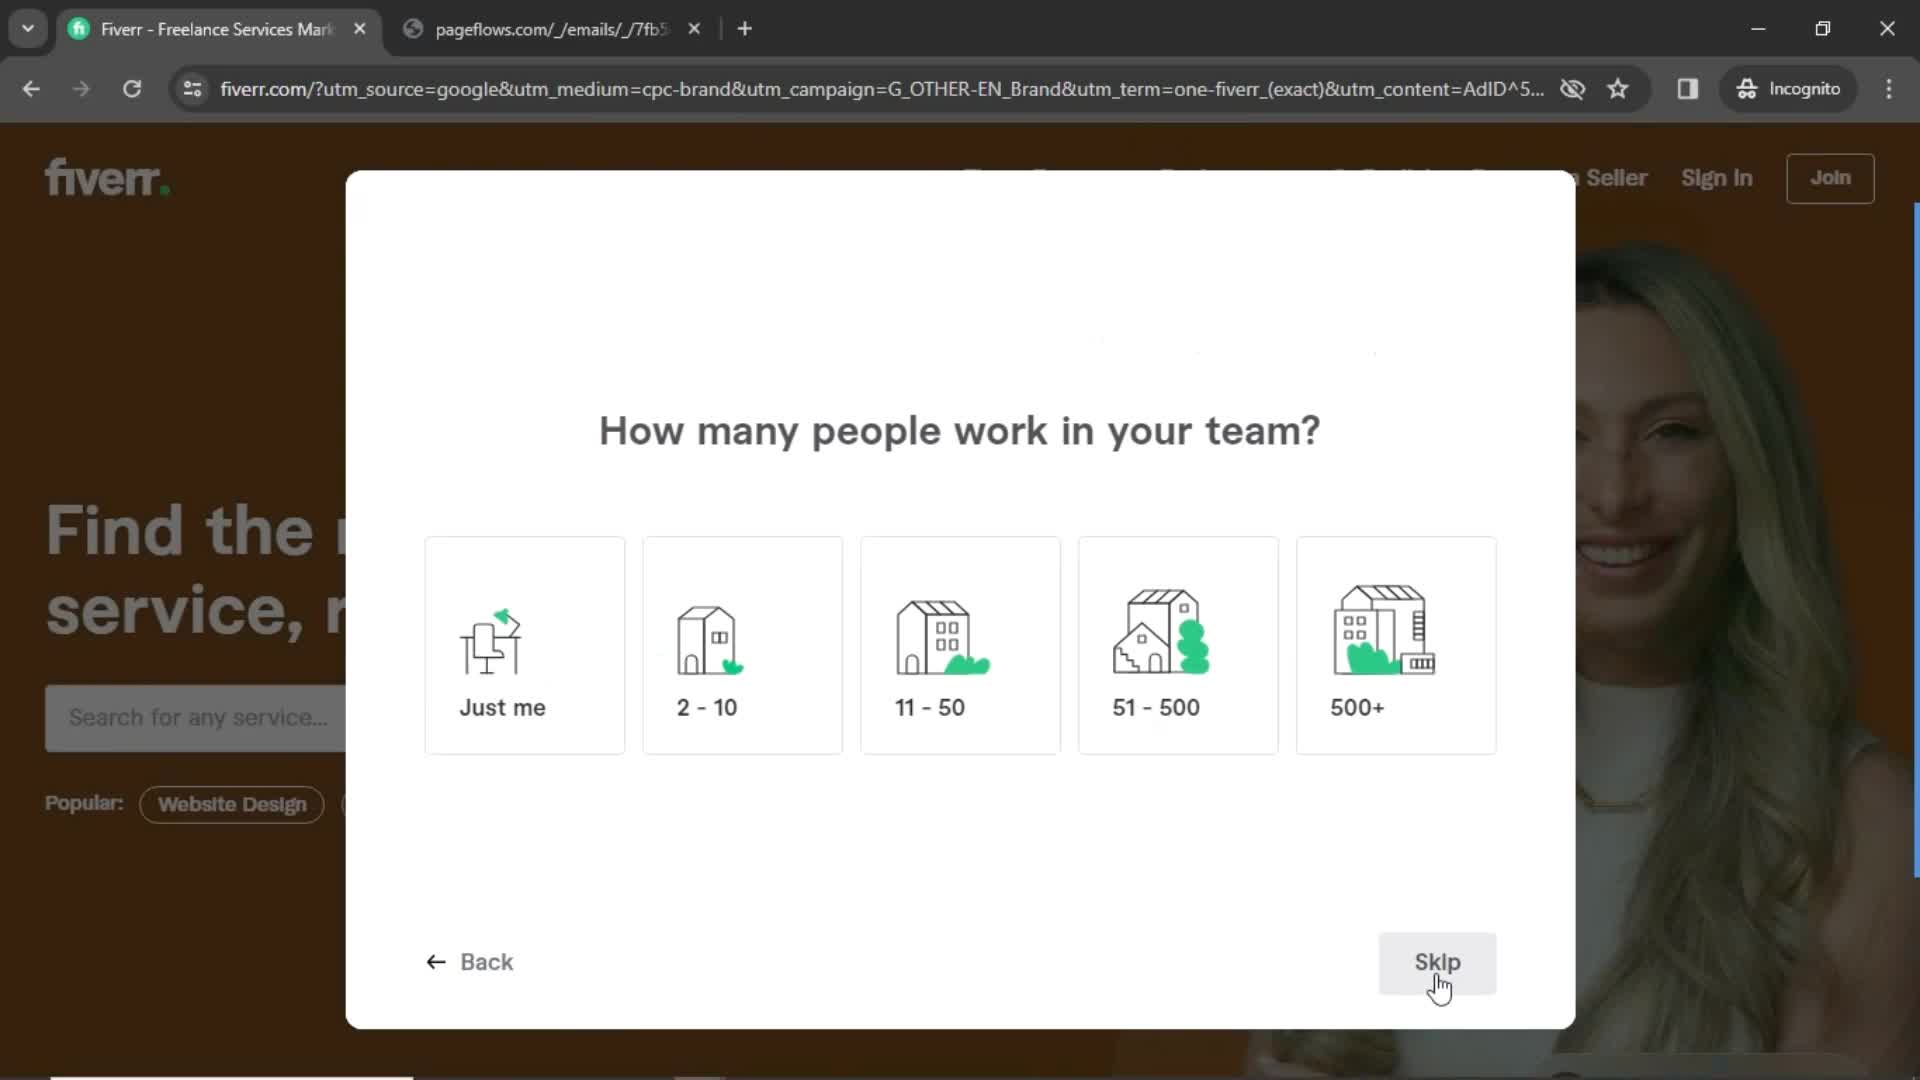 Fiverr select team size screenshot